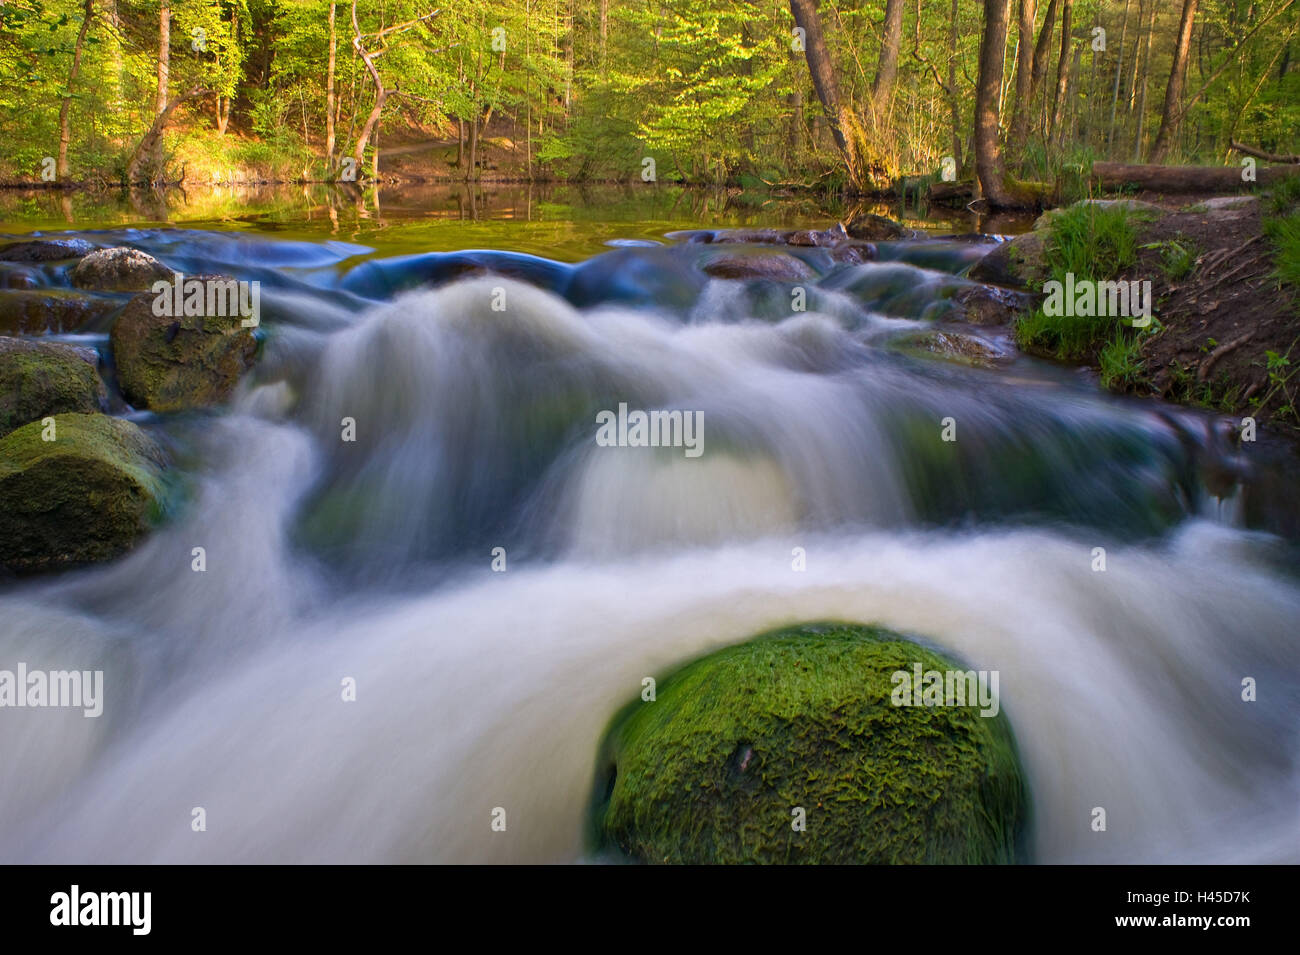 Forest, river, rocks, rapids, Long Exposure, Stock Photo